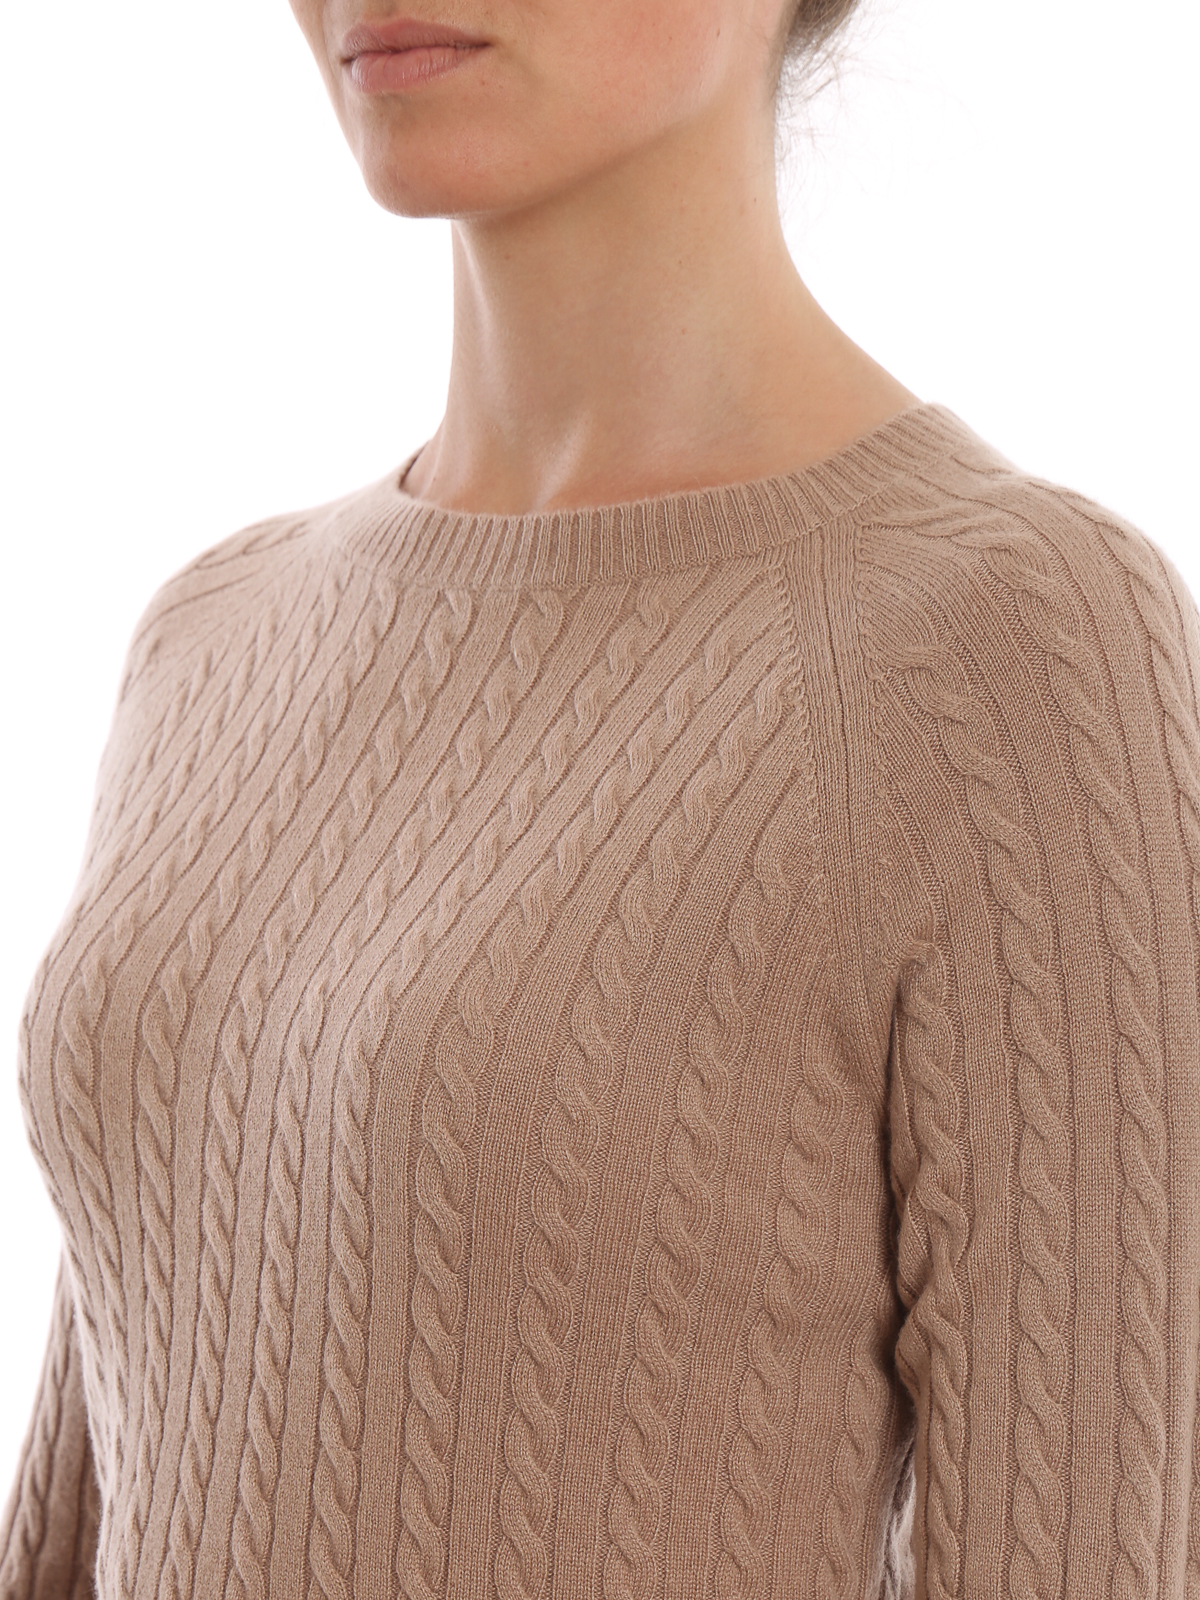 Crew necks Max Mara - Fleur cable knit cashmere sweater - 136605996004